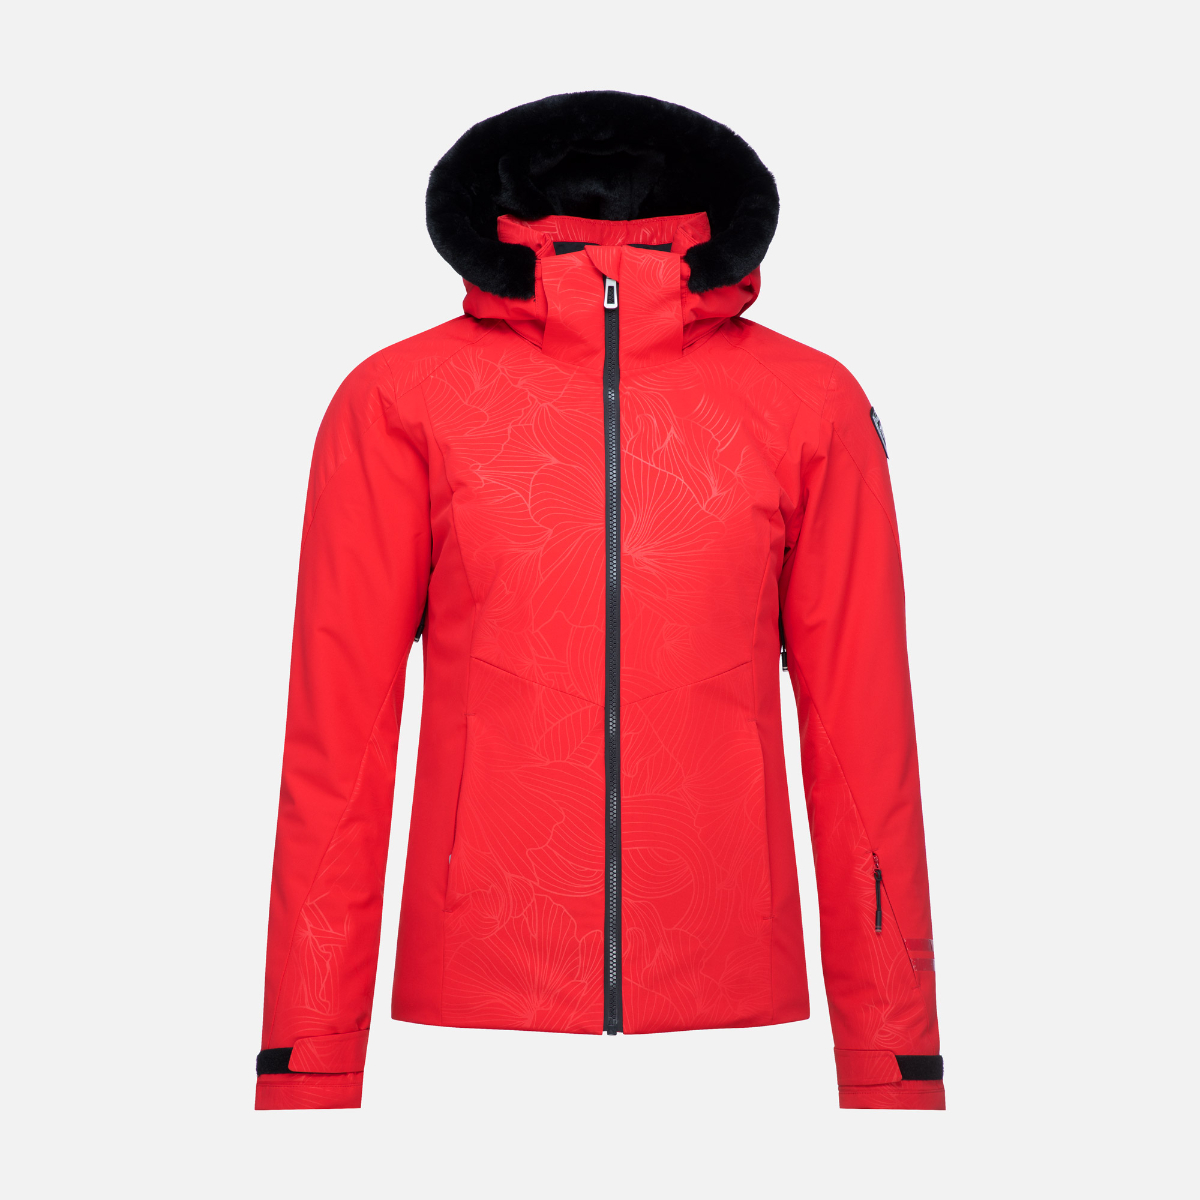 Red Jacket Apparel Remote Control – Original Six S / Heather Grey Heather Grey S